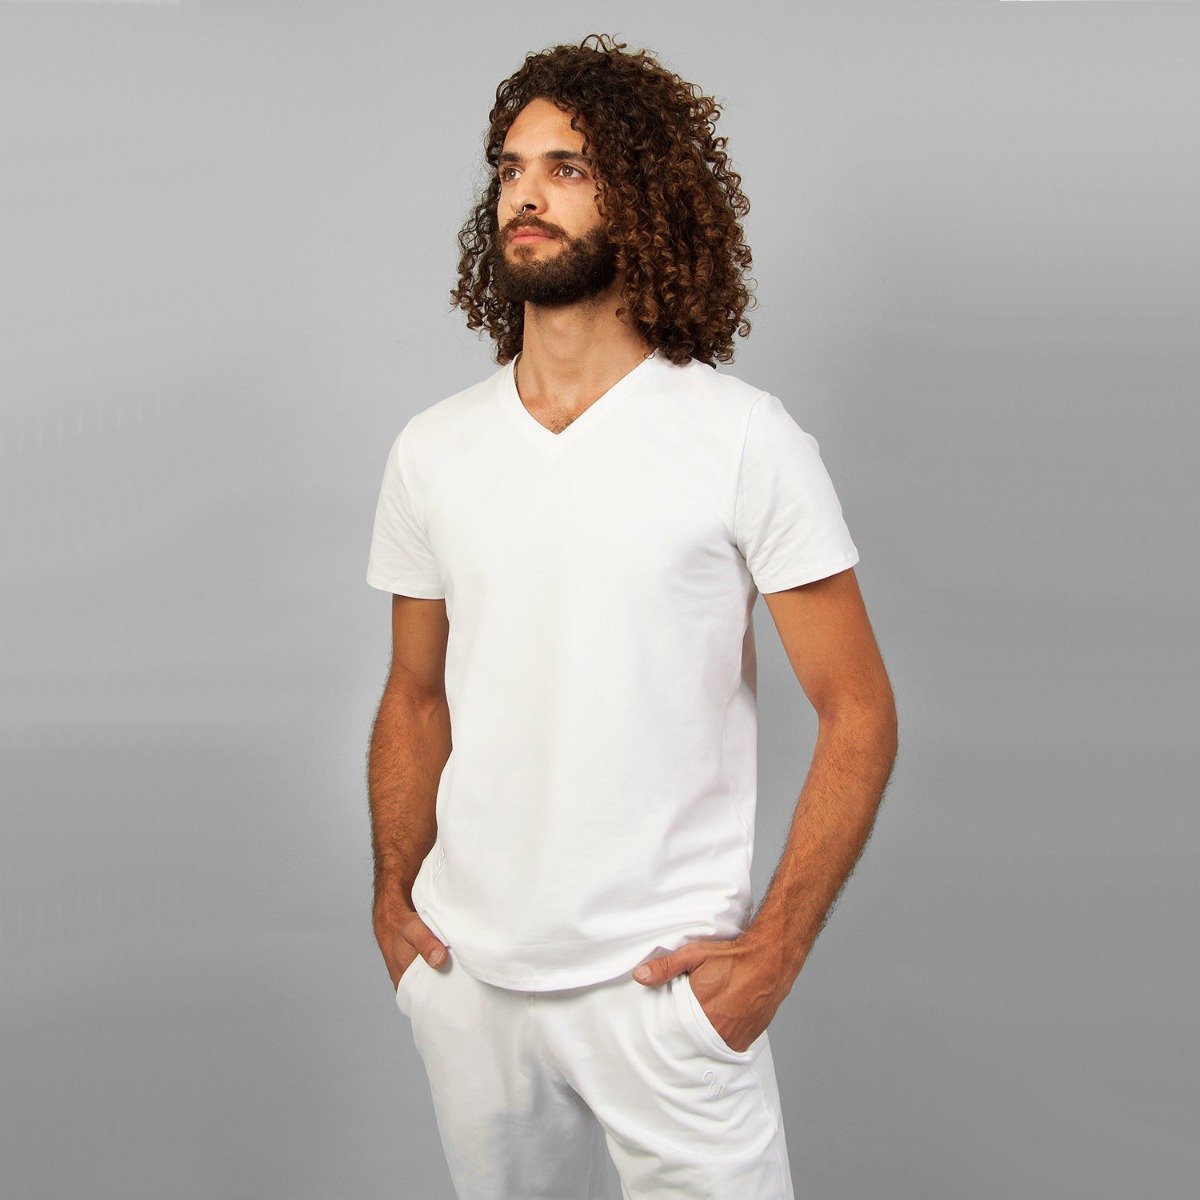 Yoga T-Shirts Men - Organic Cotton and Bamboo